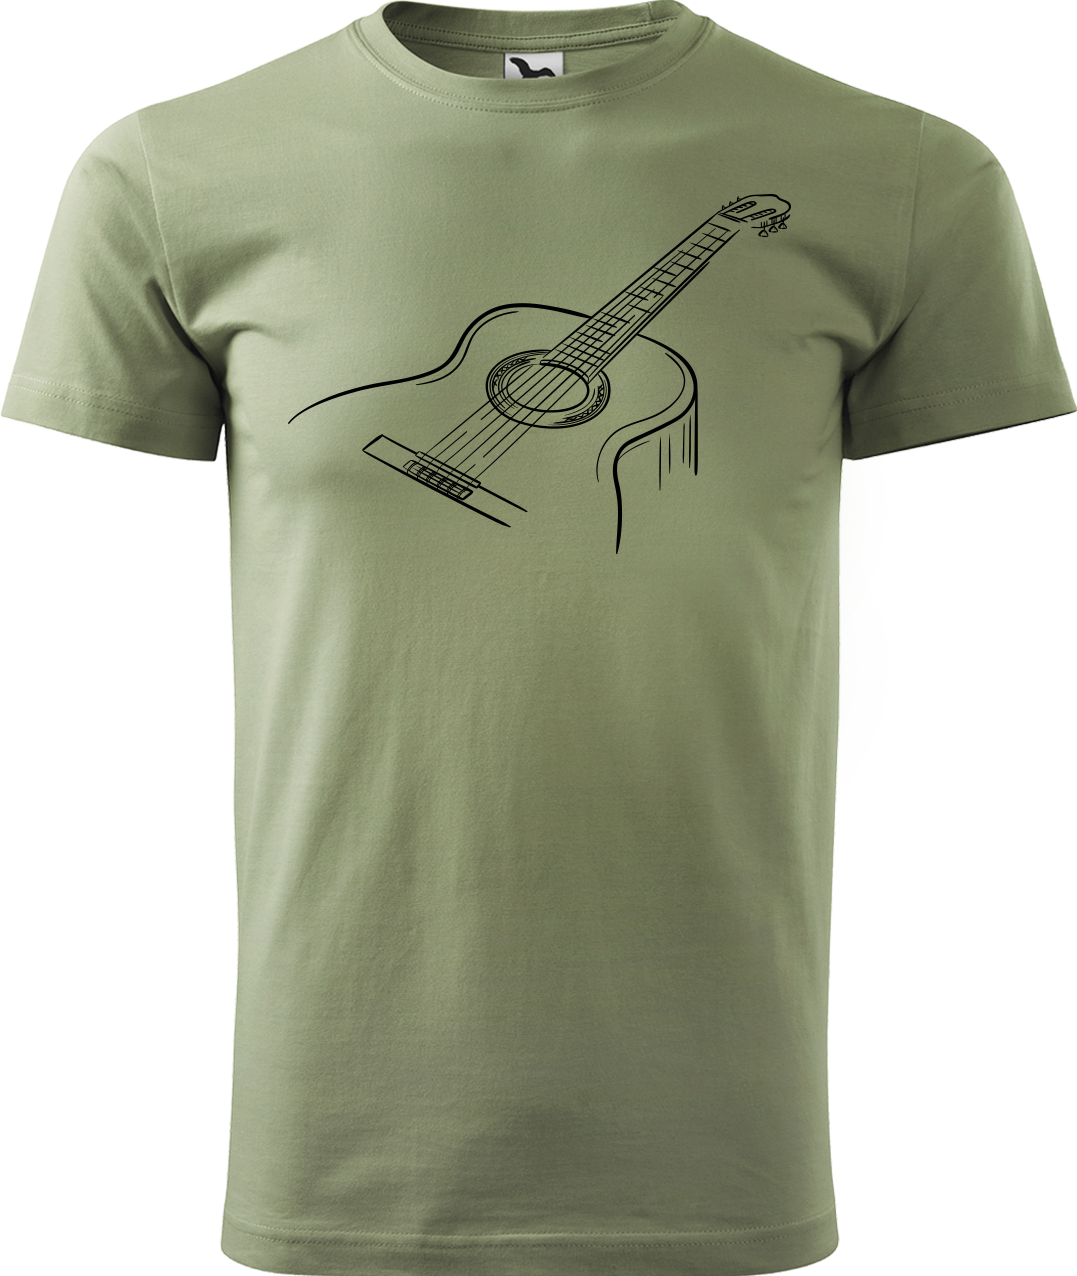 Pánské tričko s kytarou - Klasická kytara Velikost: XL, Barva: Světlá khaki (28)